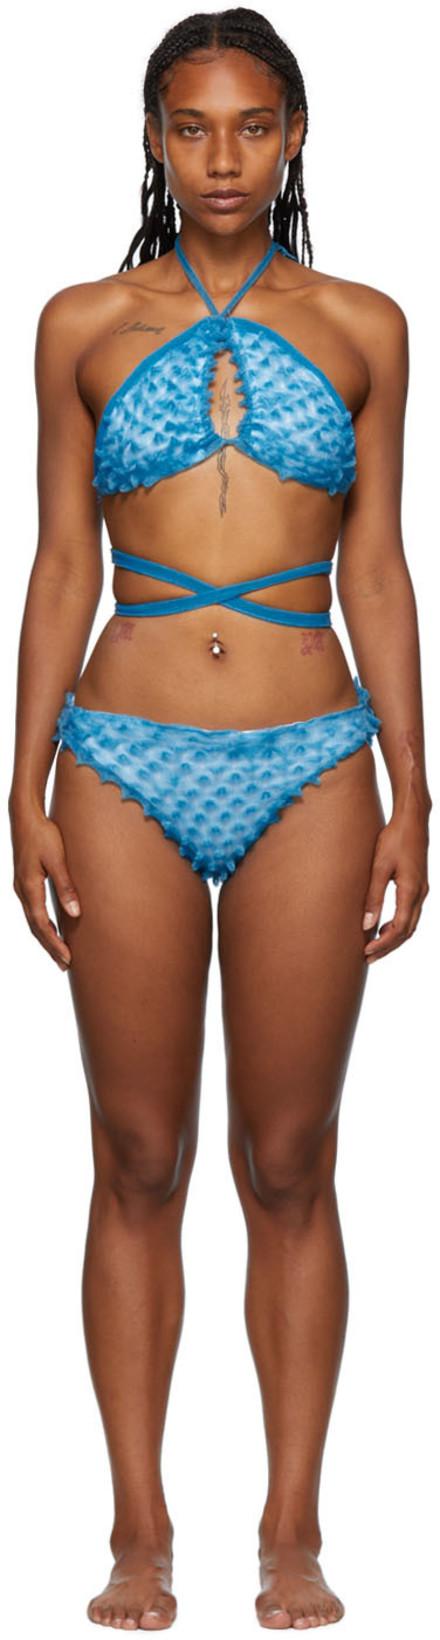 Blue Whale-Tail Bikini Bottom by CHET LO